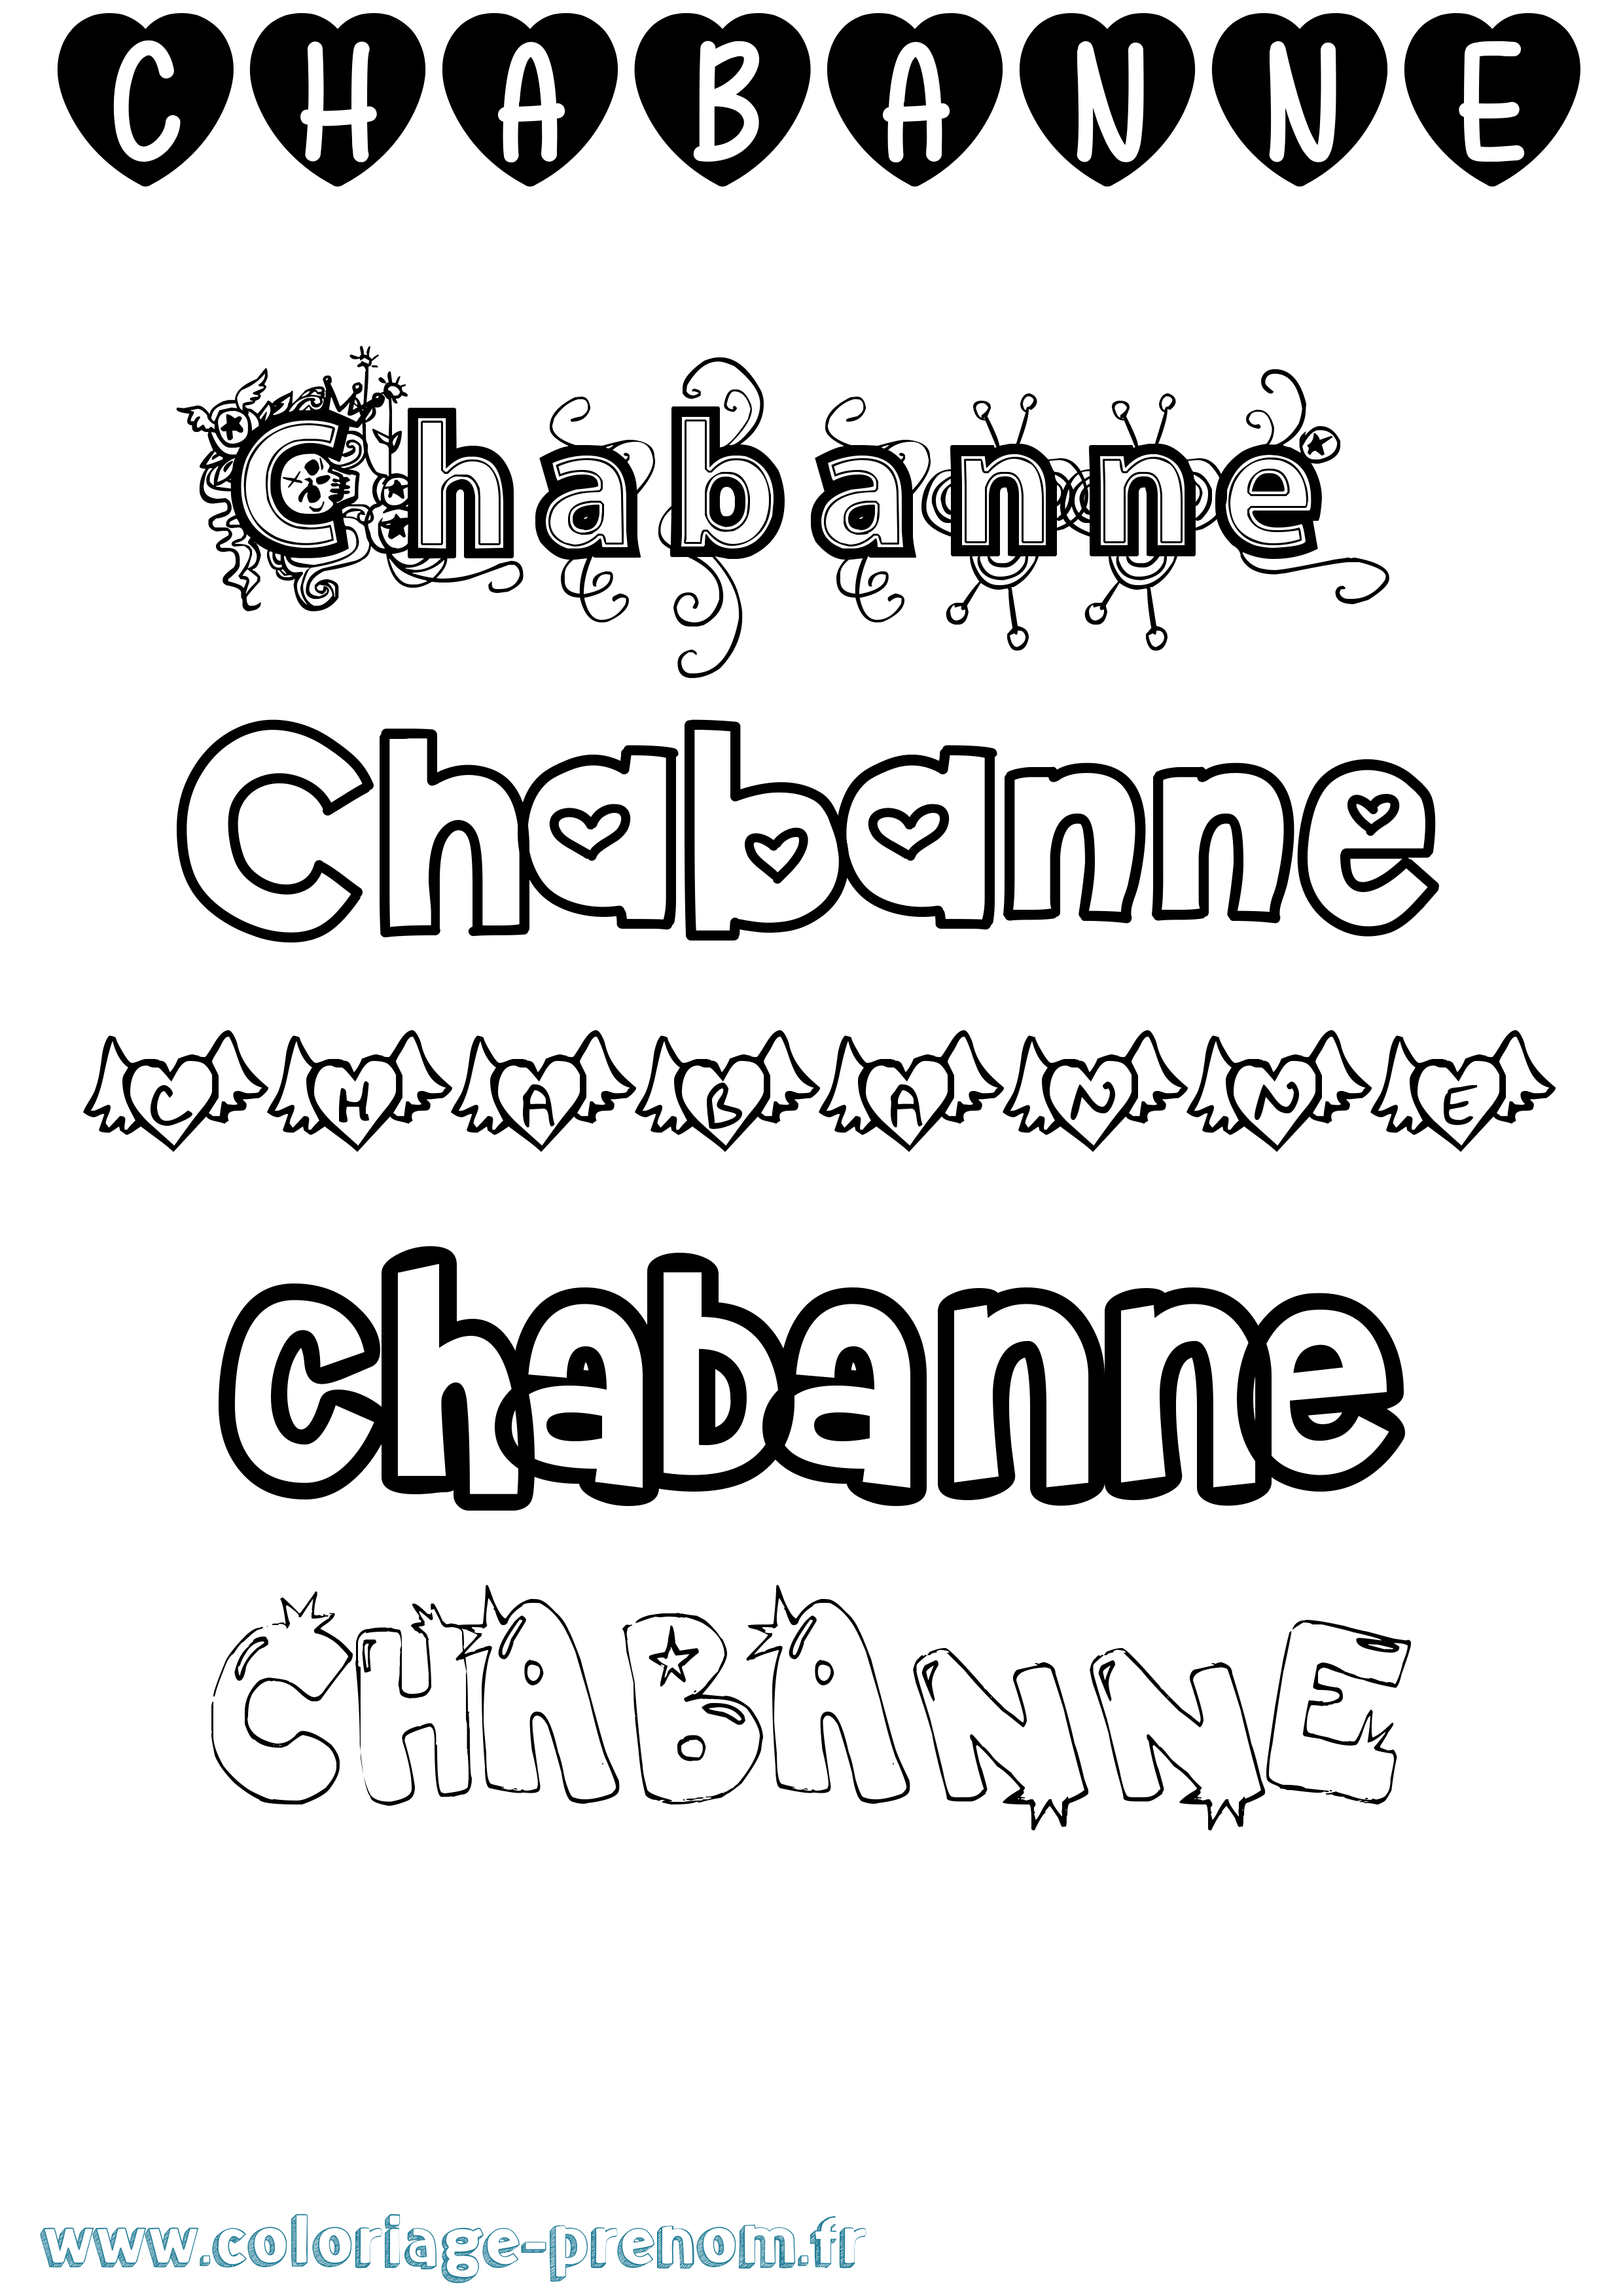 Coloriage prénom Chabanne Girly